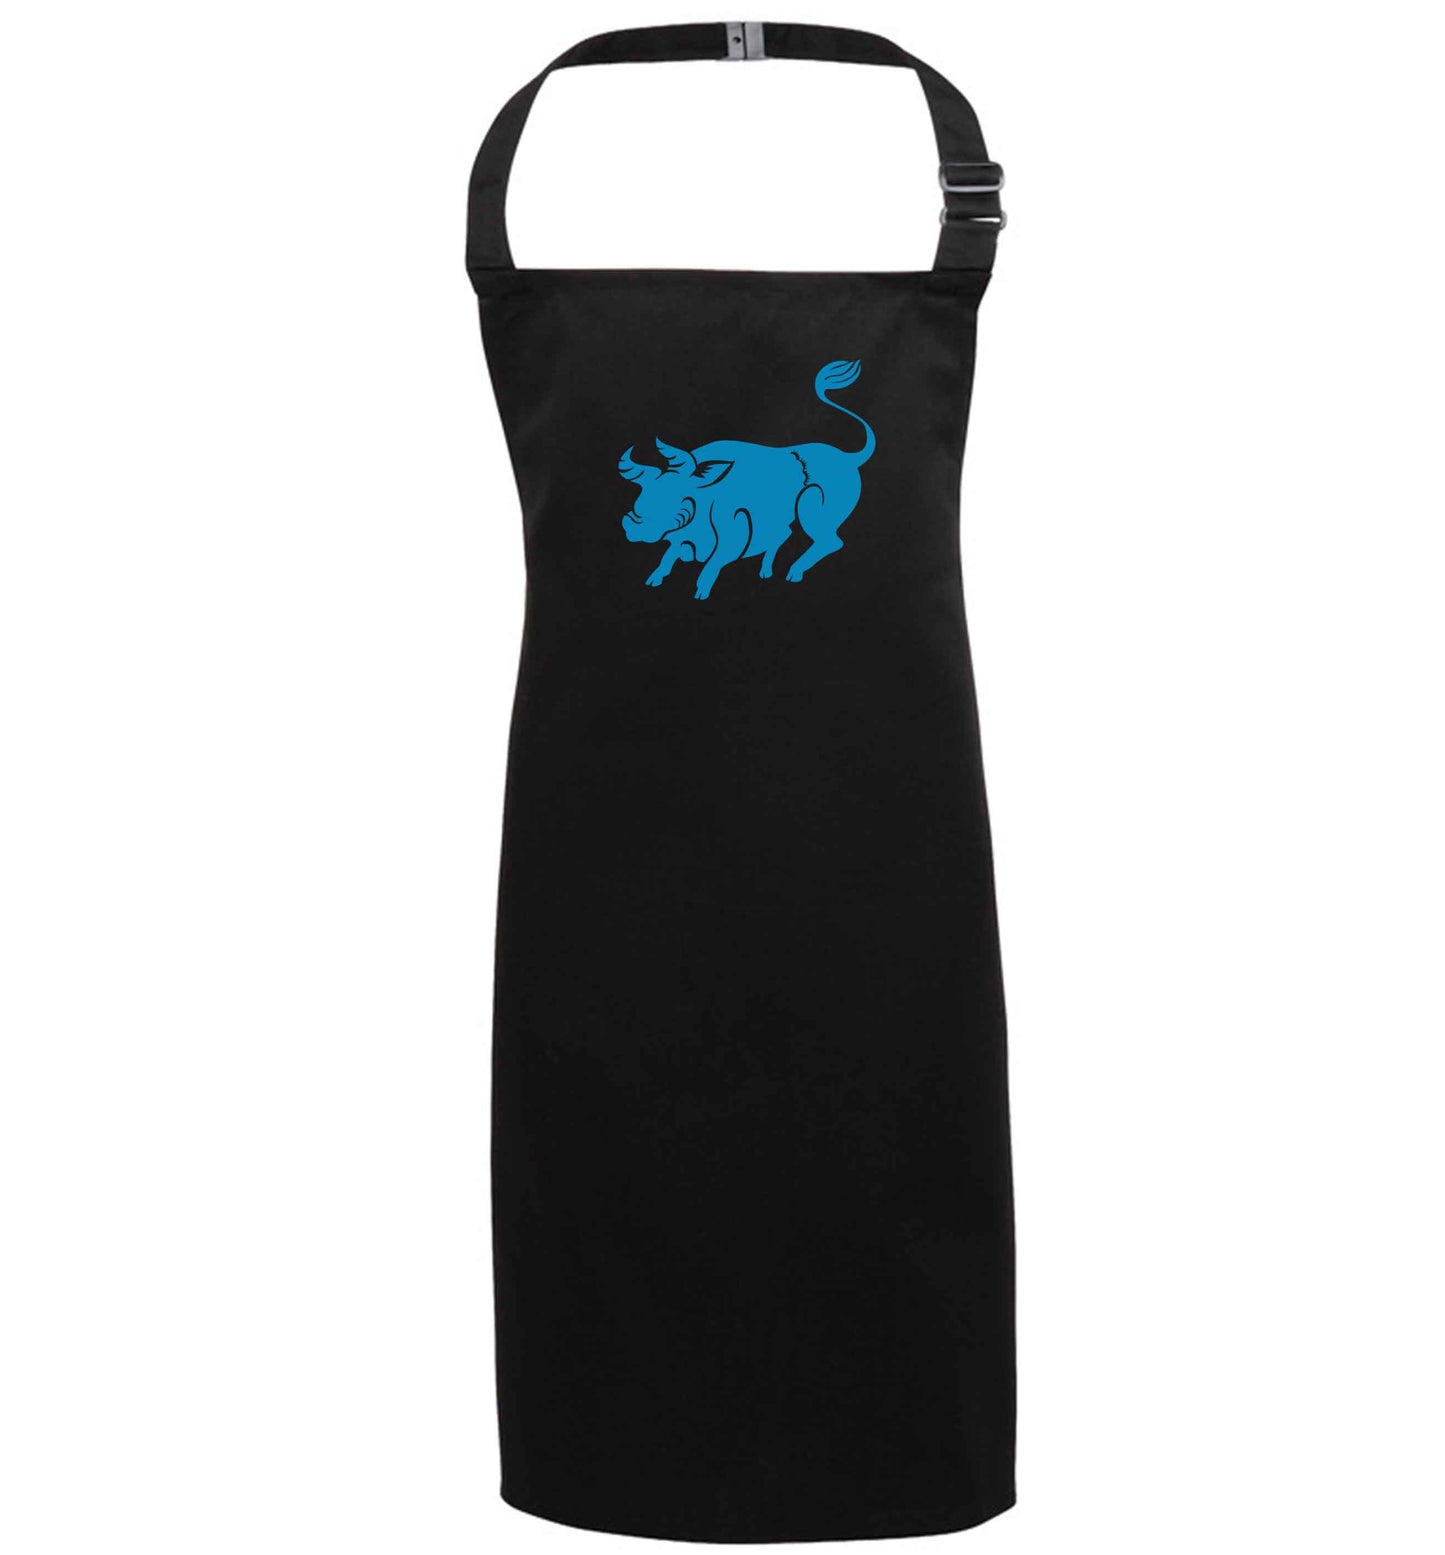 Blue ox black apron 7-10 years